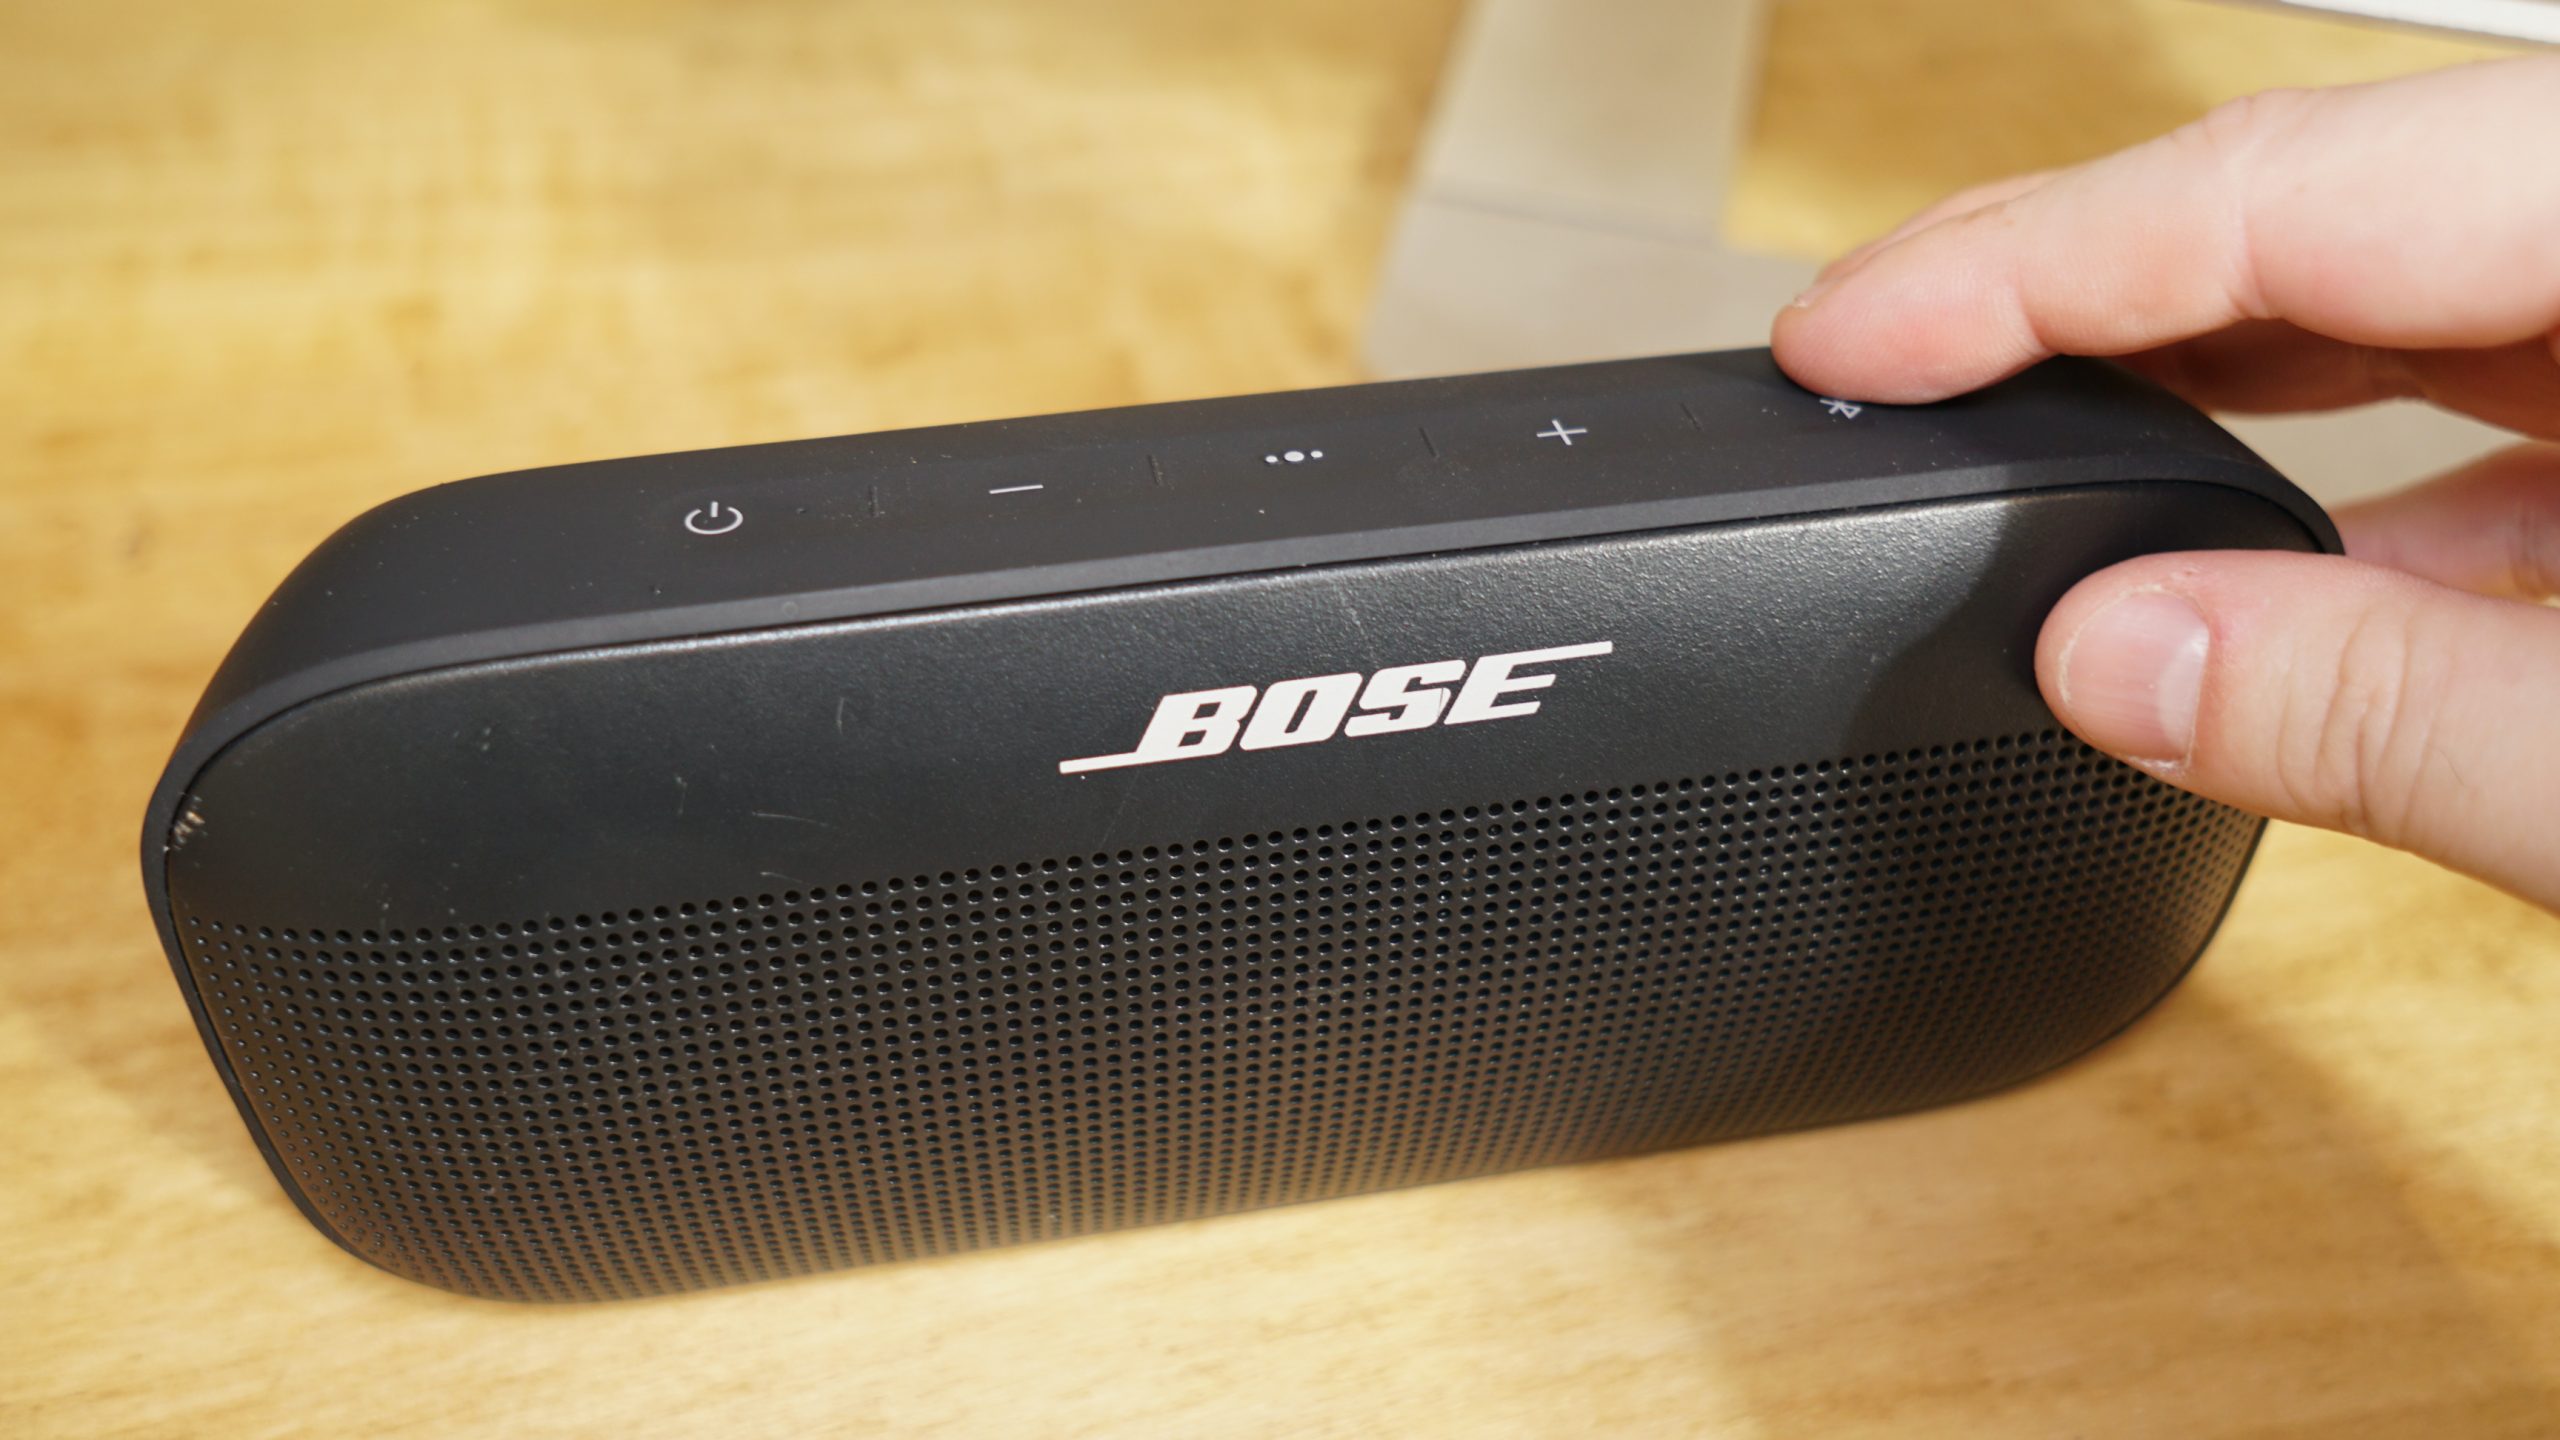 Enceinte bluetooth BOSE Soundlink Flex Bluetooth Speaker Black